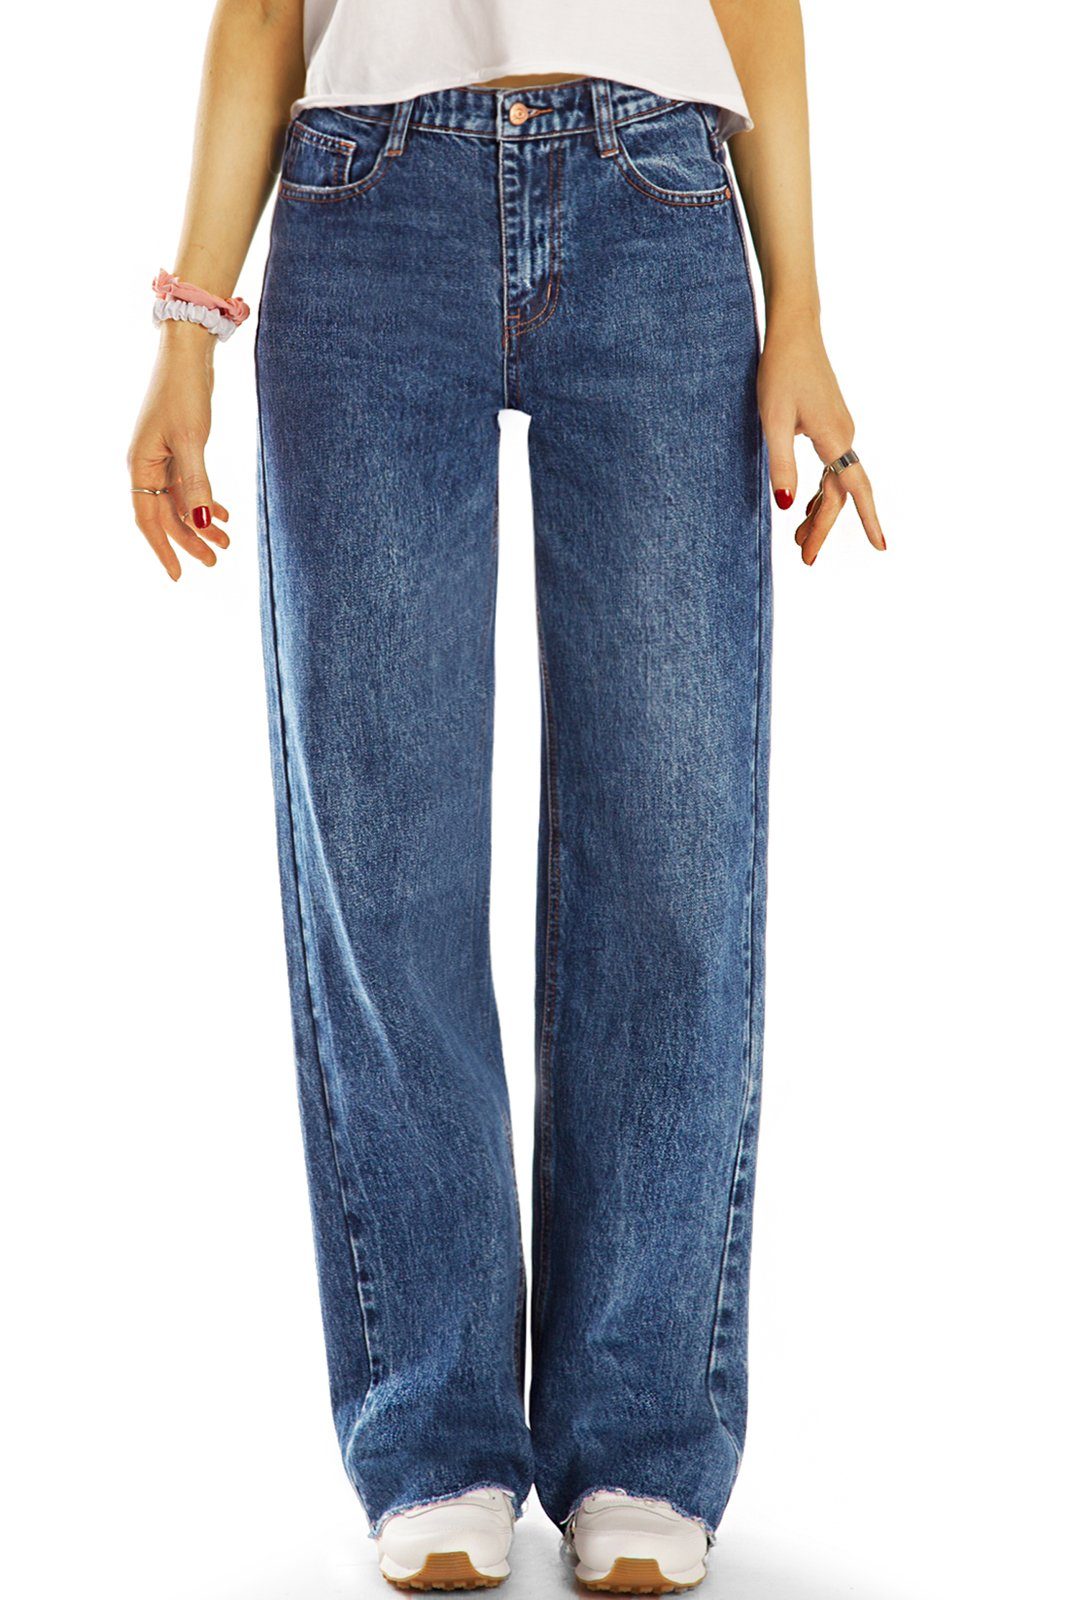 slouchy Hose j27g-3 Damen High Jeans be - Waist klassisch, 5-Pocket-Style Mom Jeans Slouchy - - styled modern